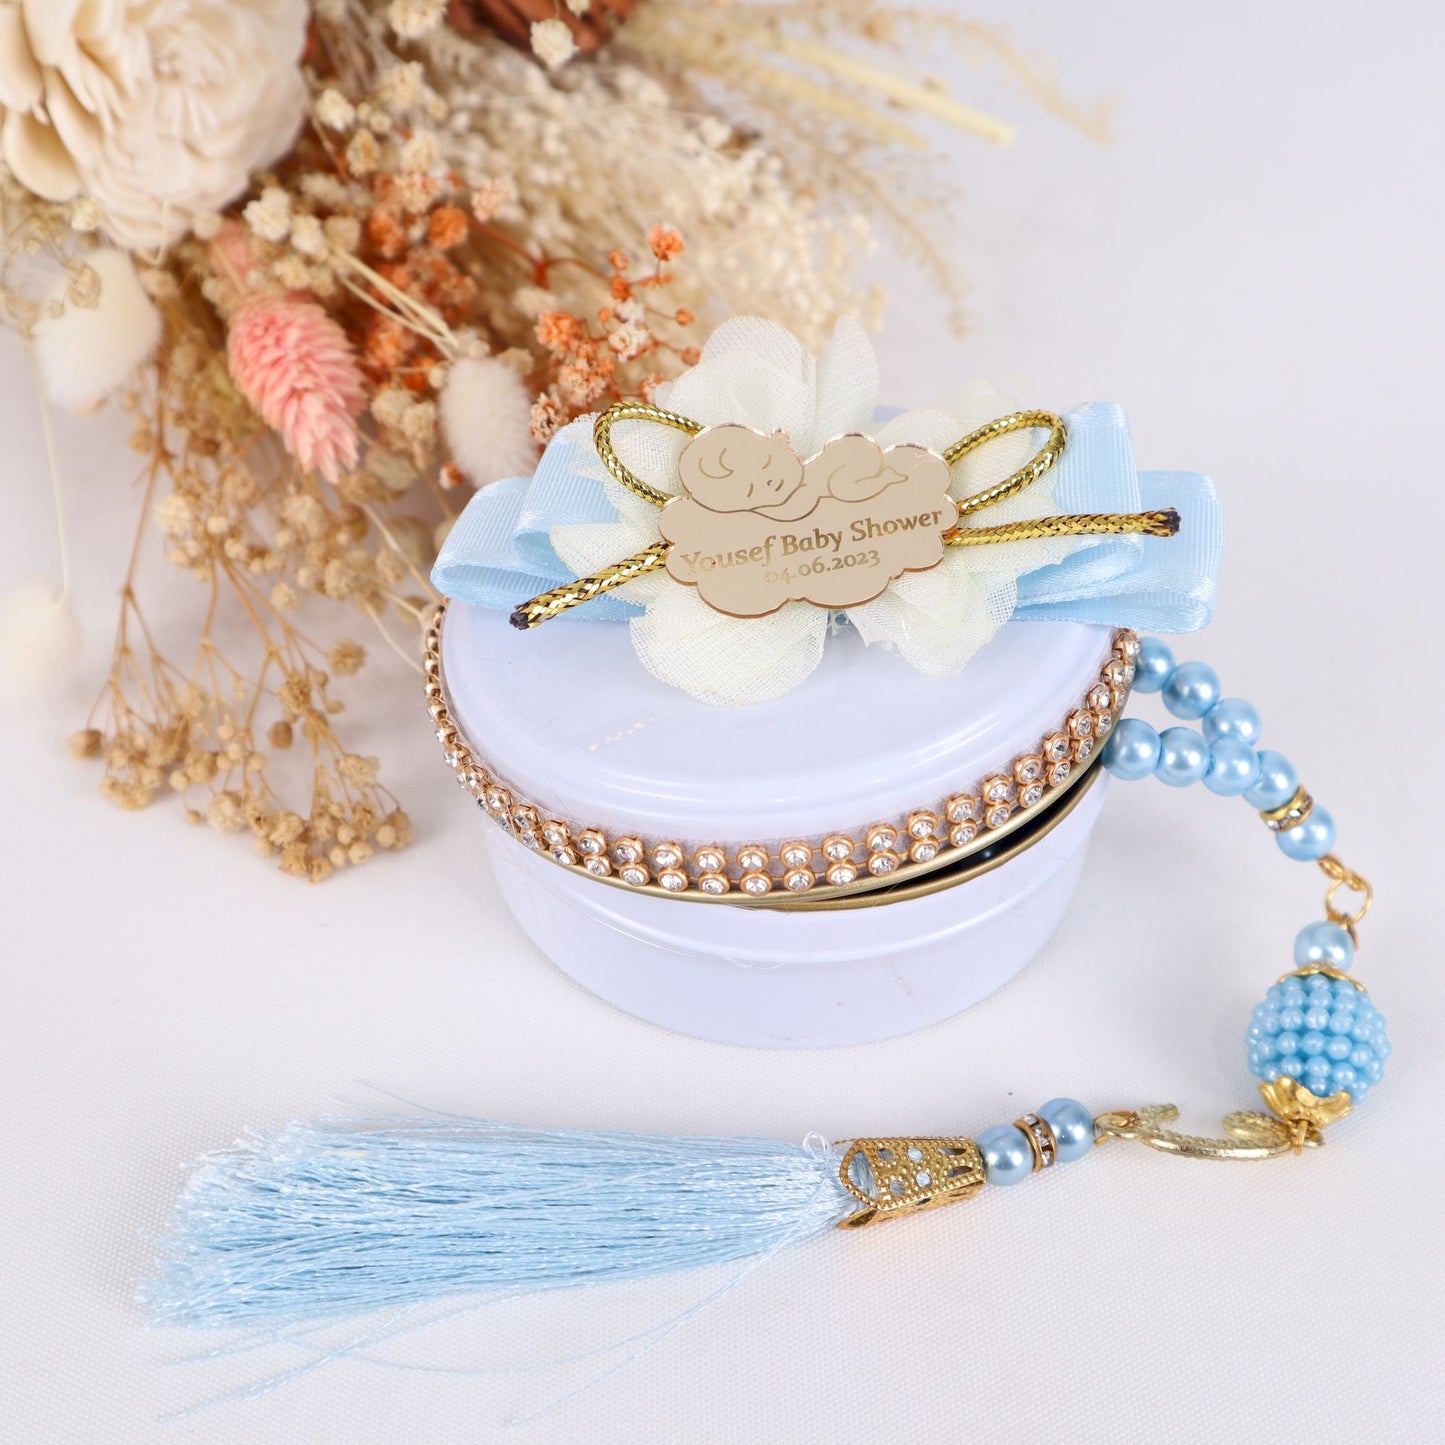 Personalized Pearl Prayer Beads in Metal Box Islamic Wedding Favors